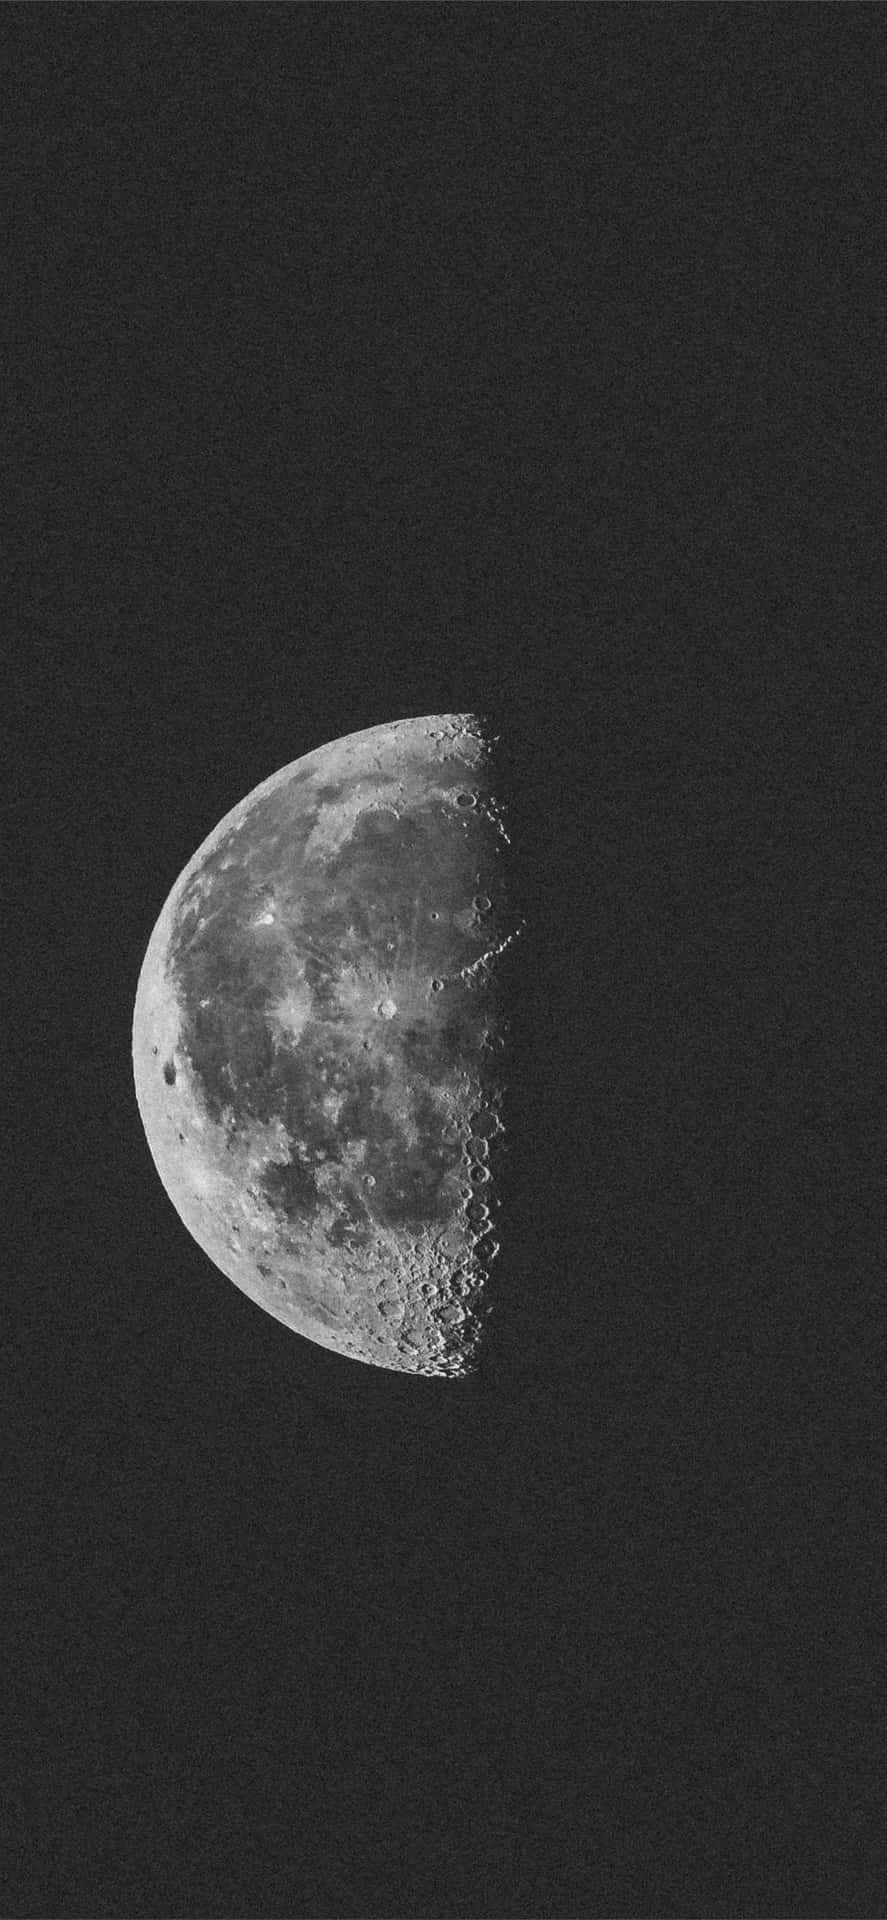 100+] Half Moon Pictures